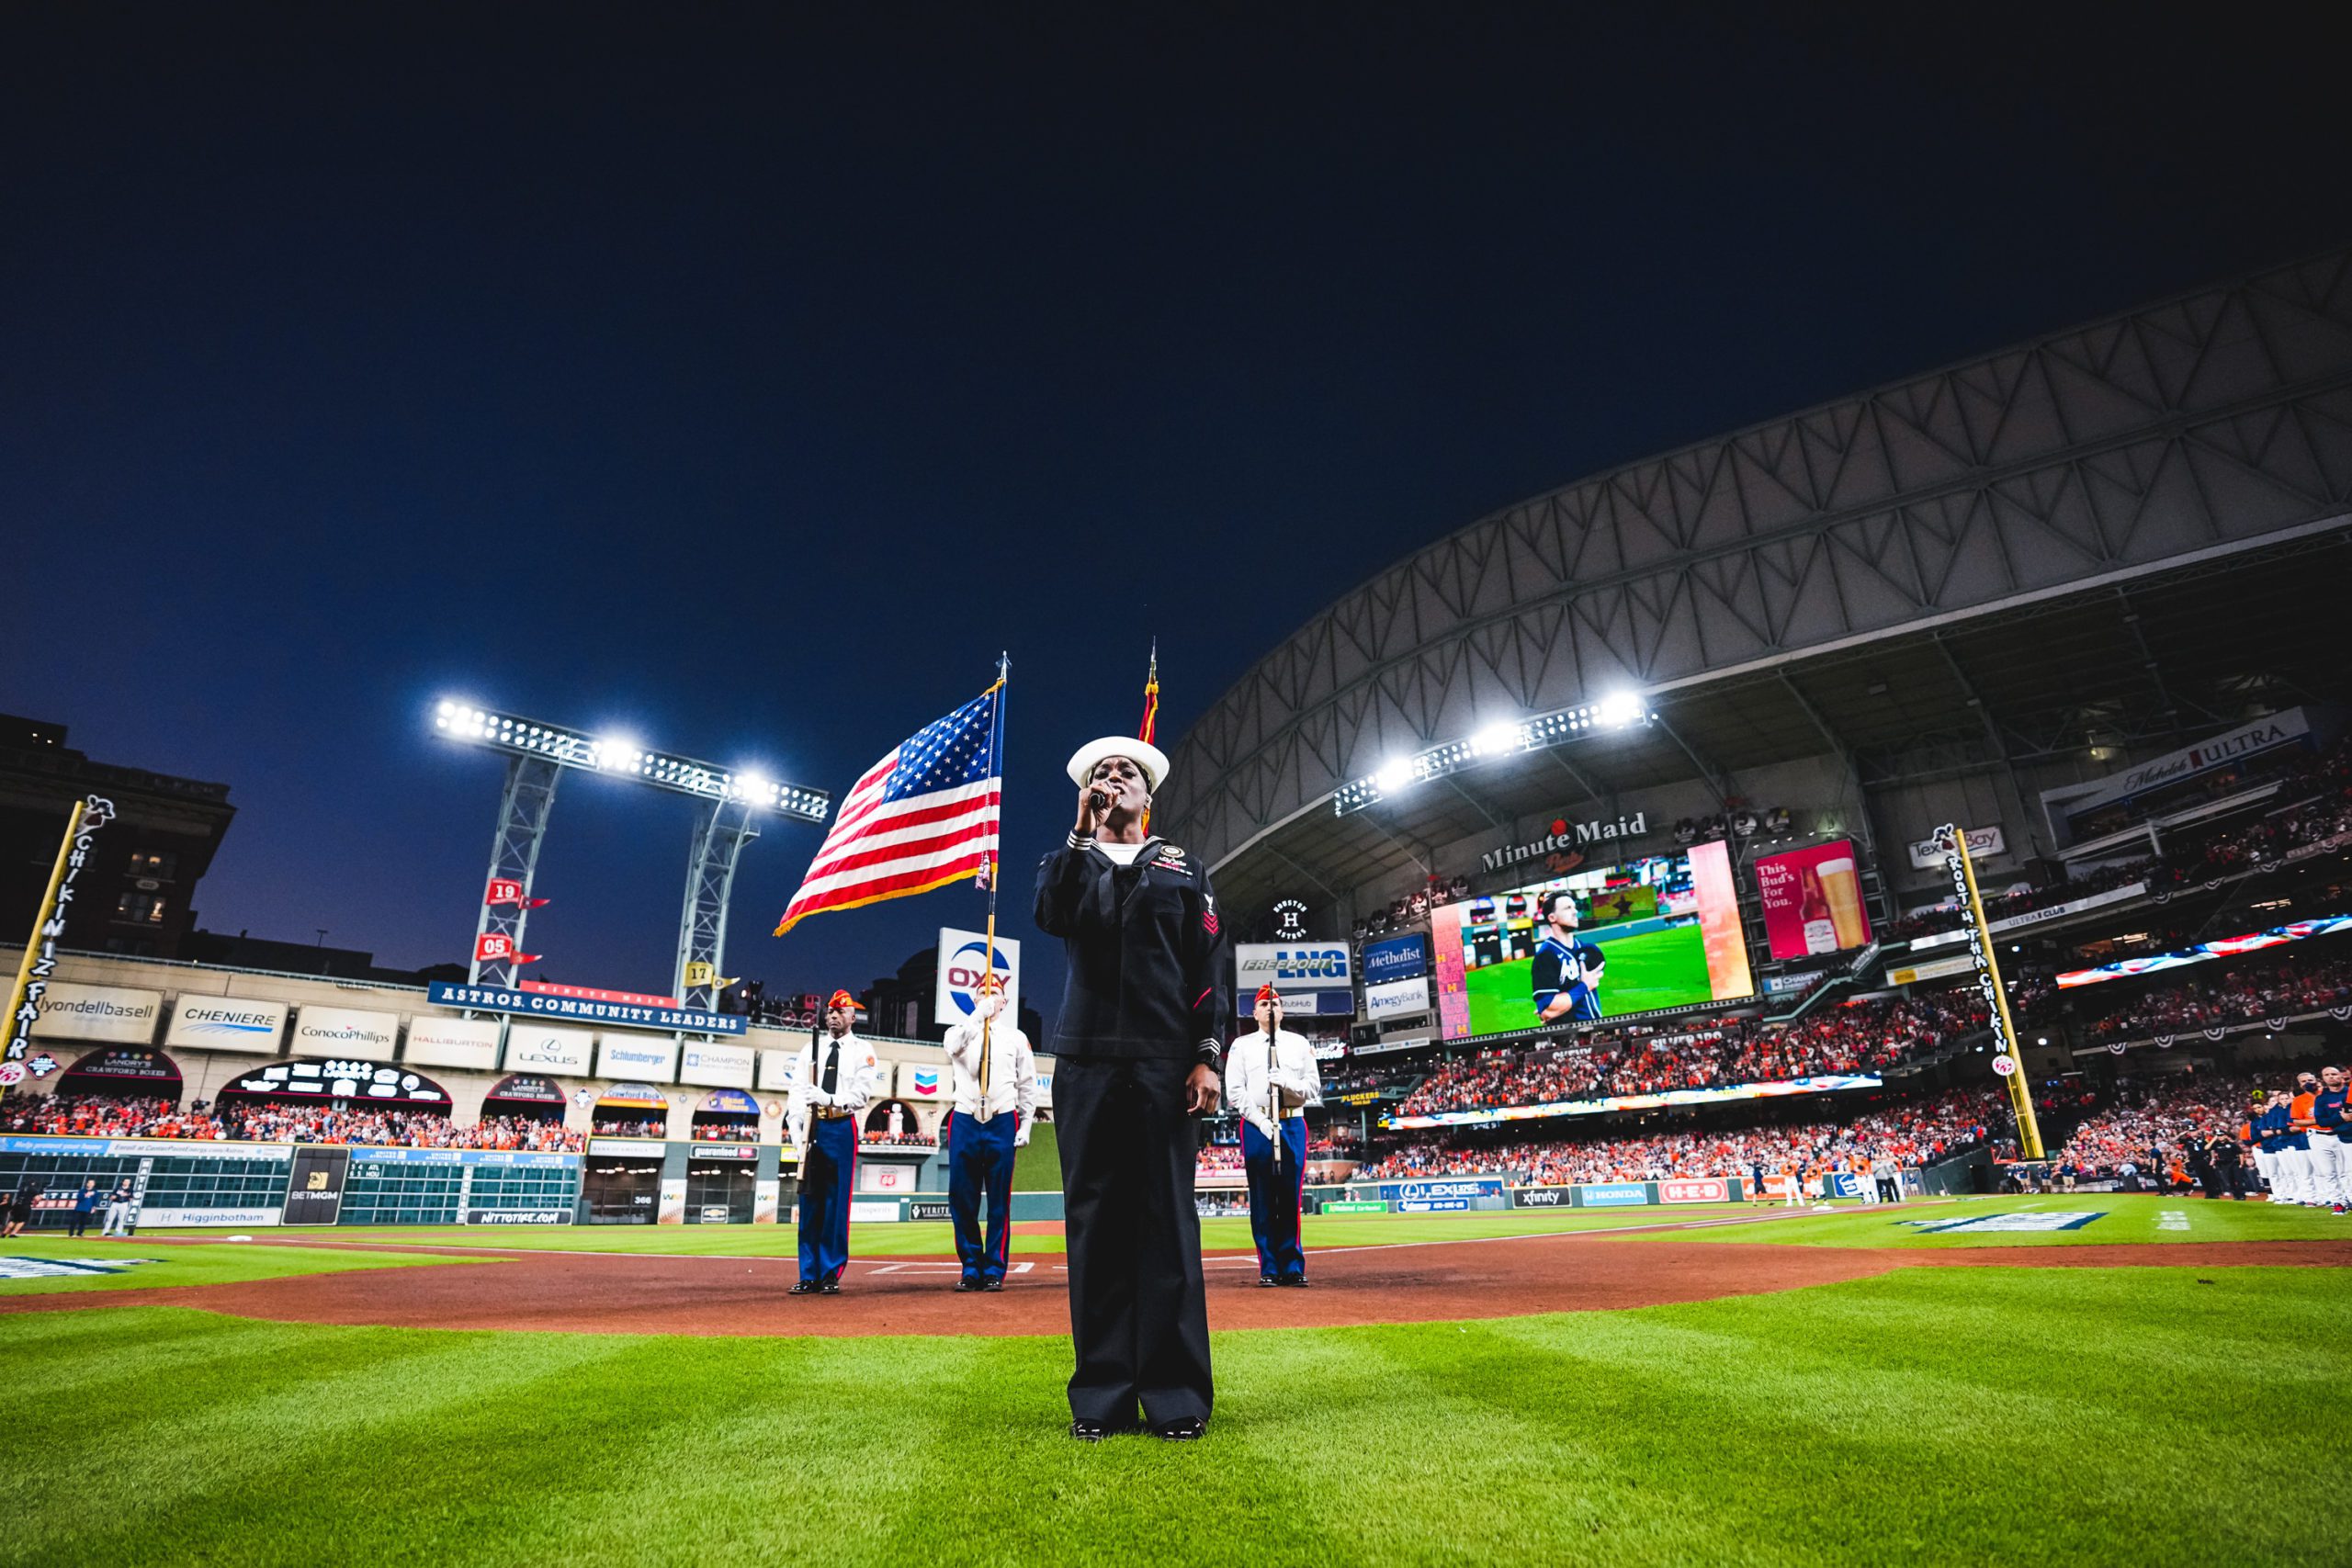 U.S Navy Sailor’s Extraordinary Voice On Display At World Series